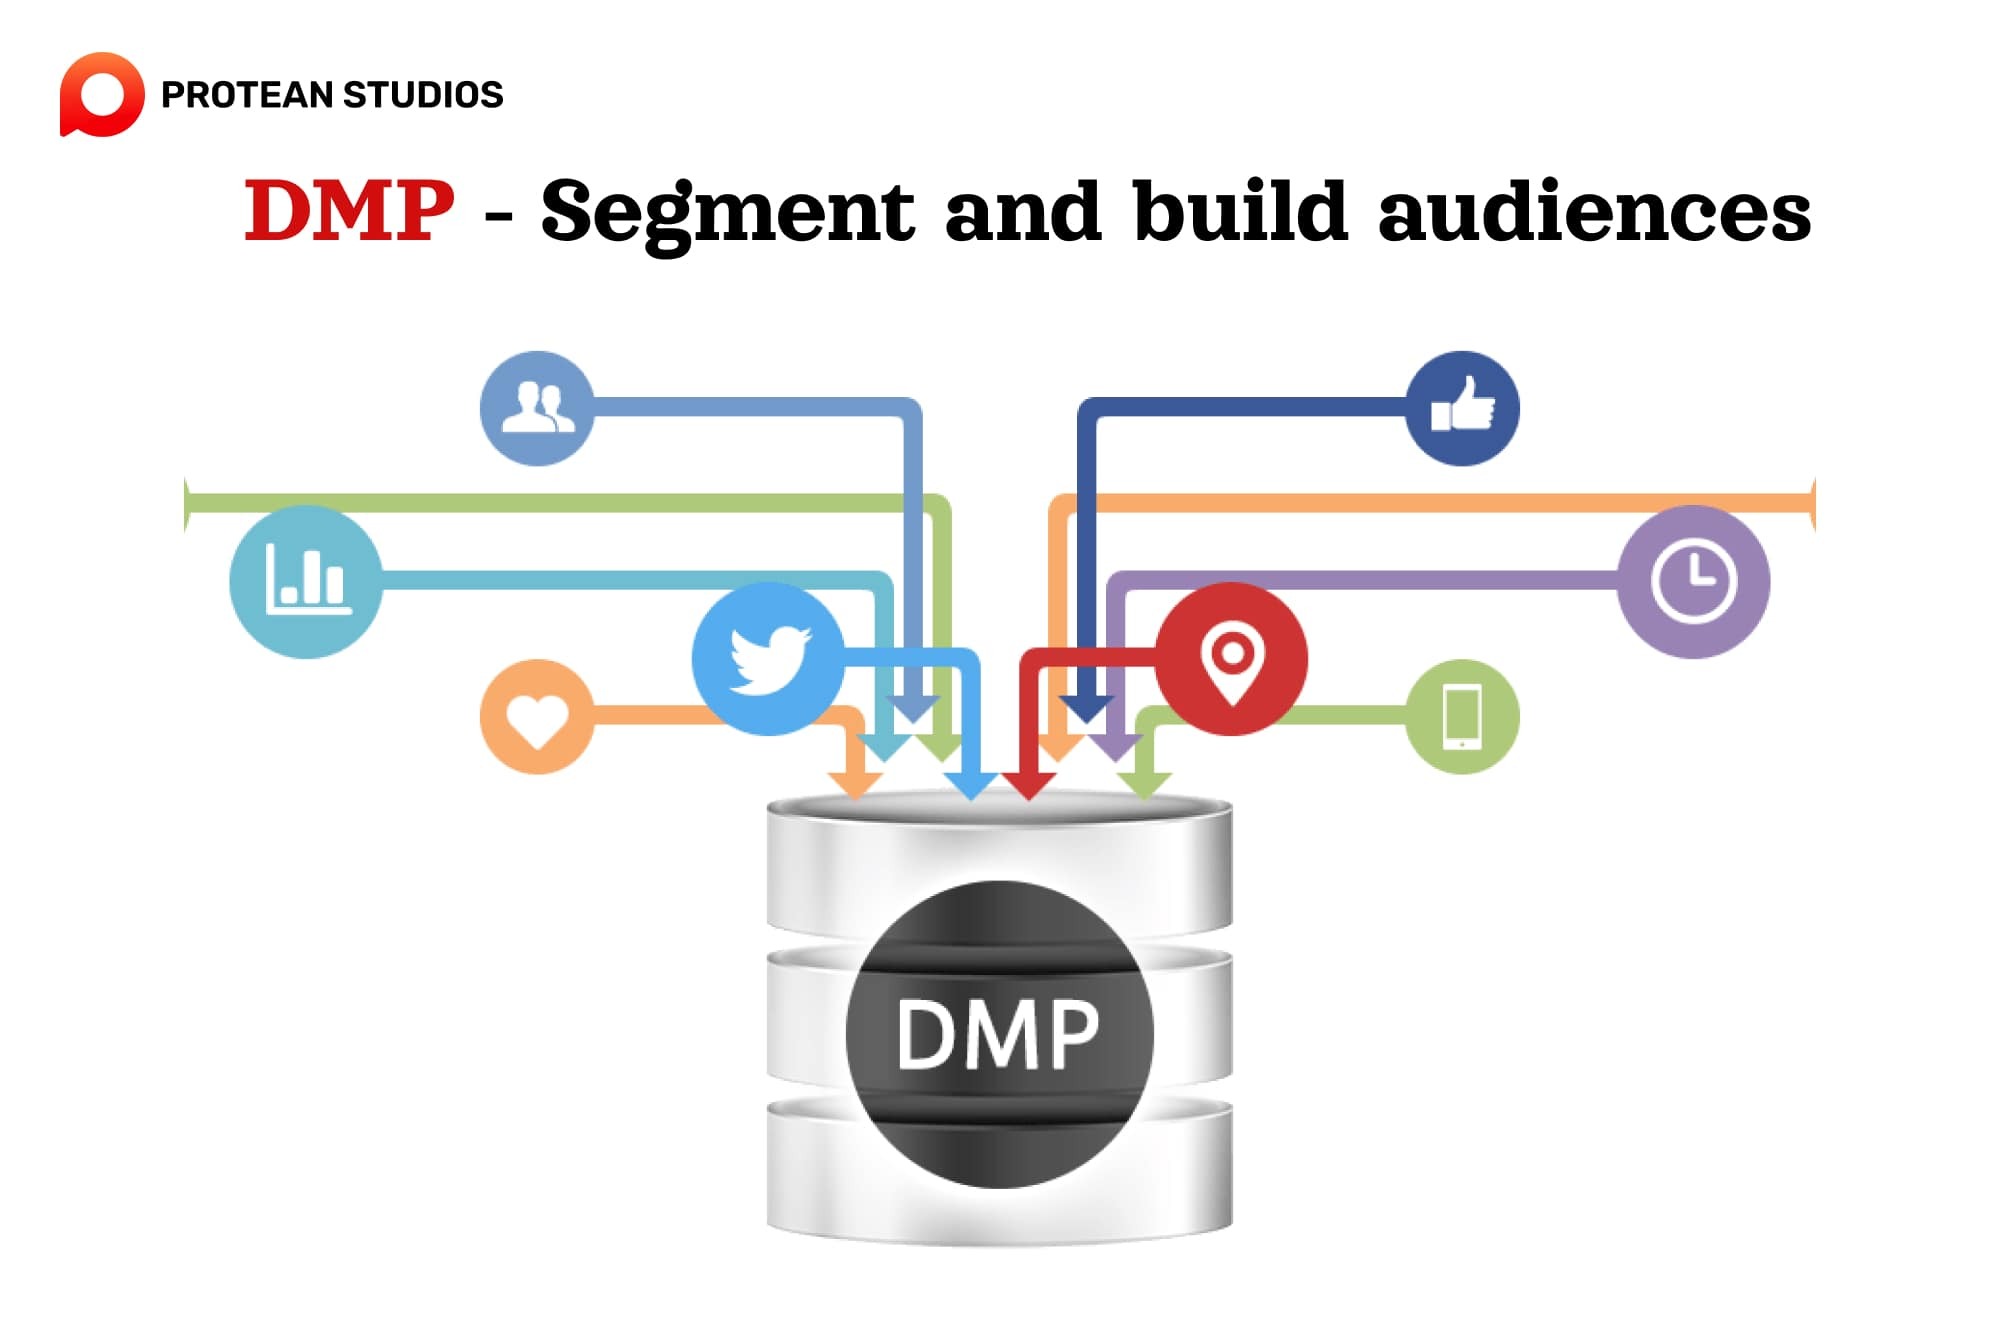 DMP will segment customer data